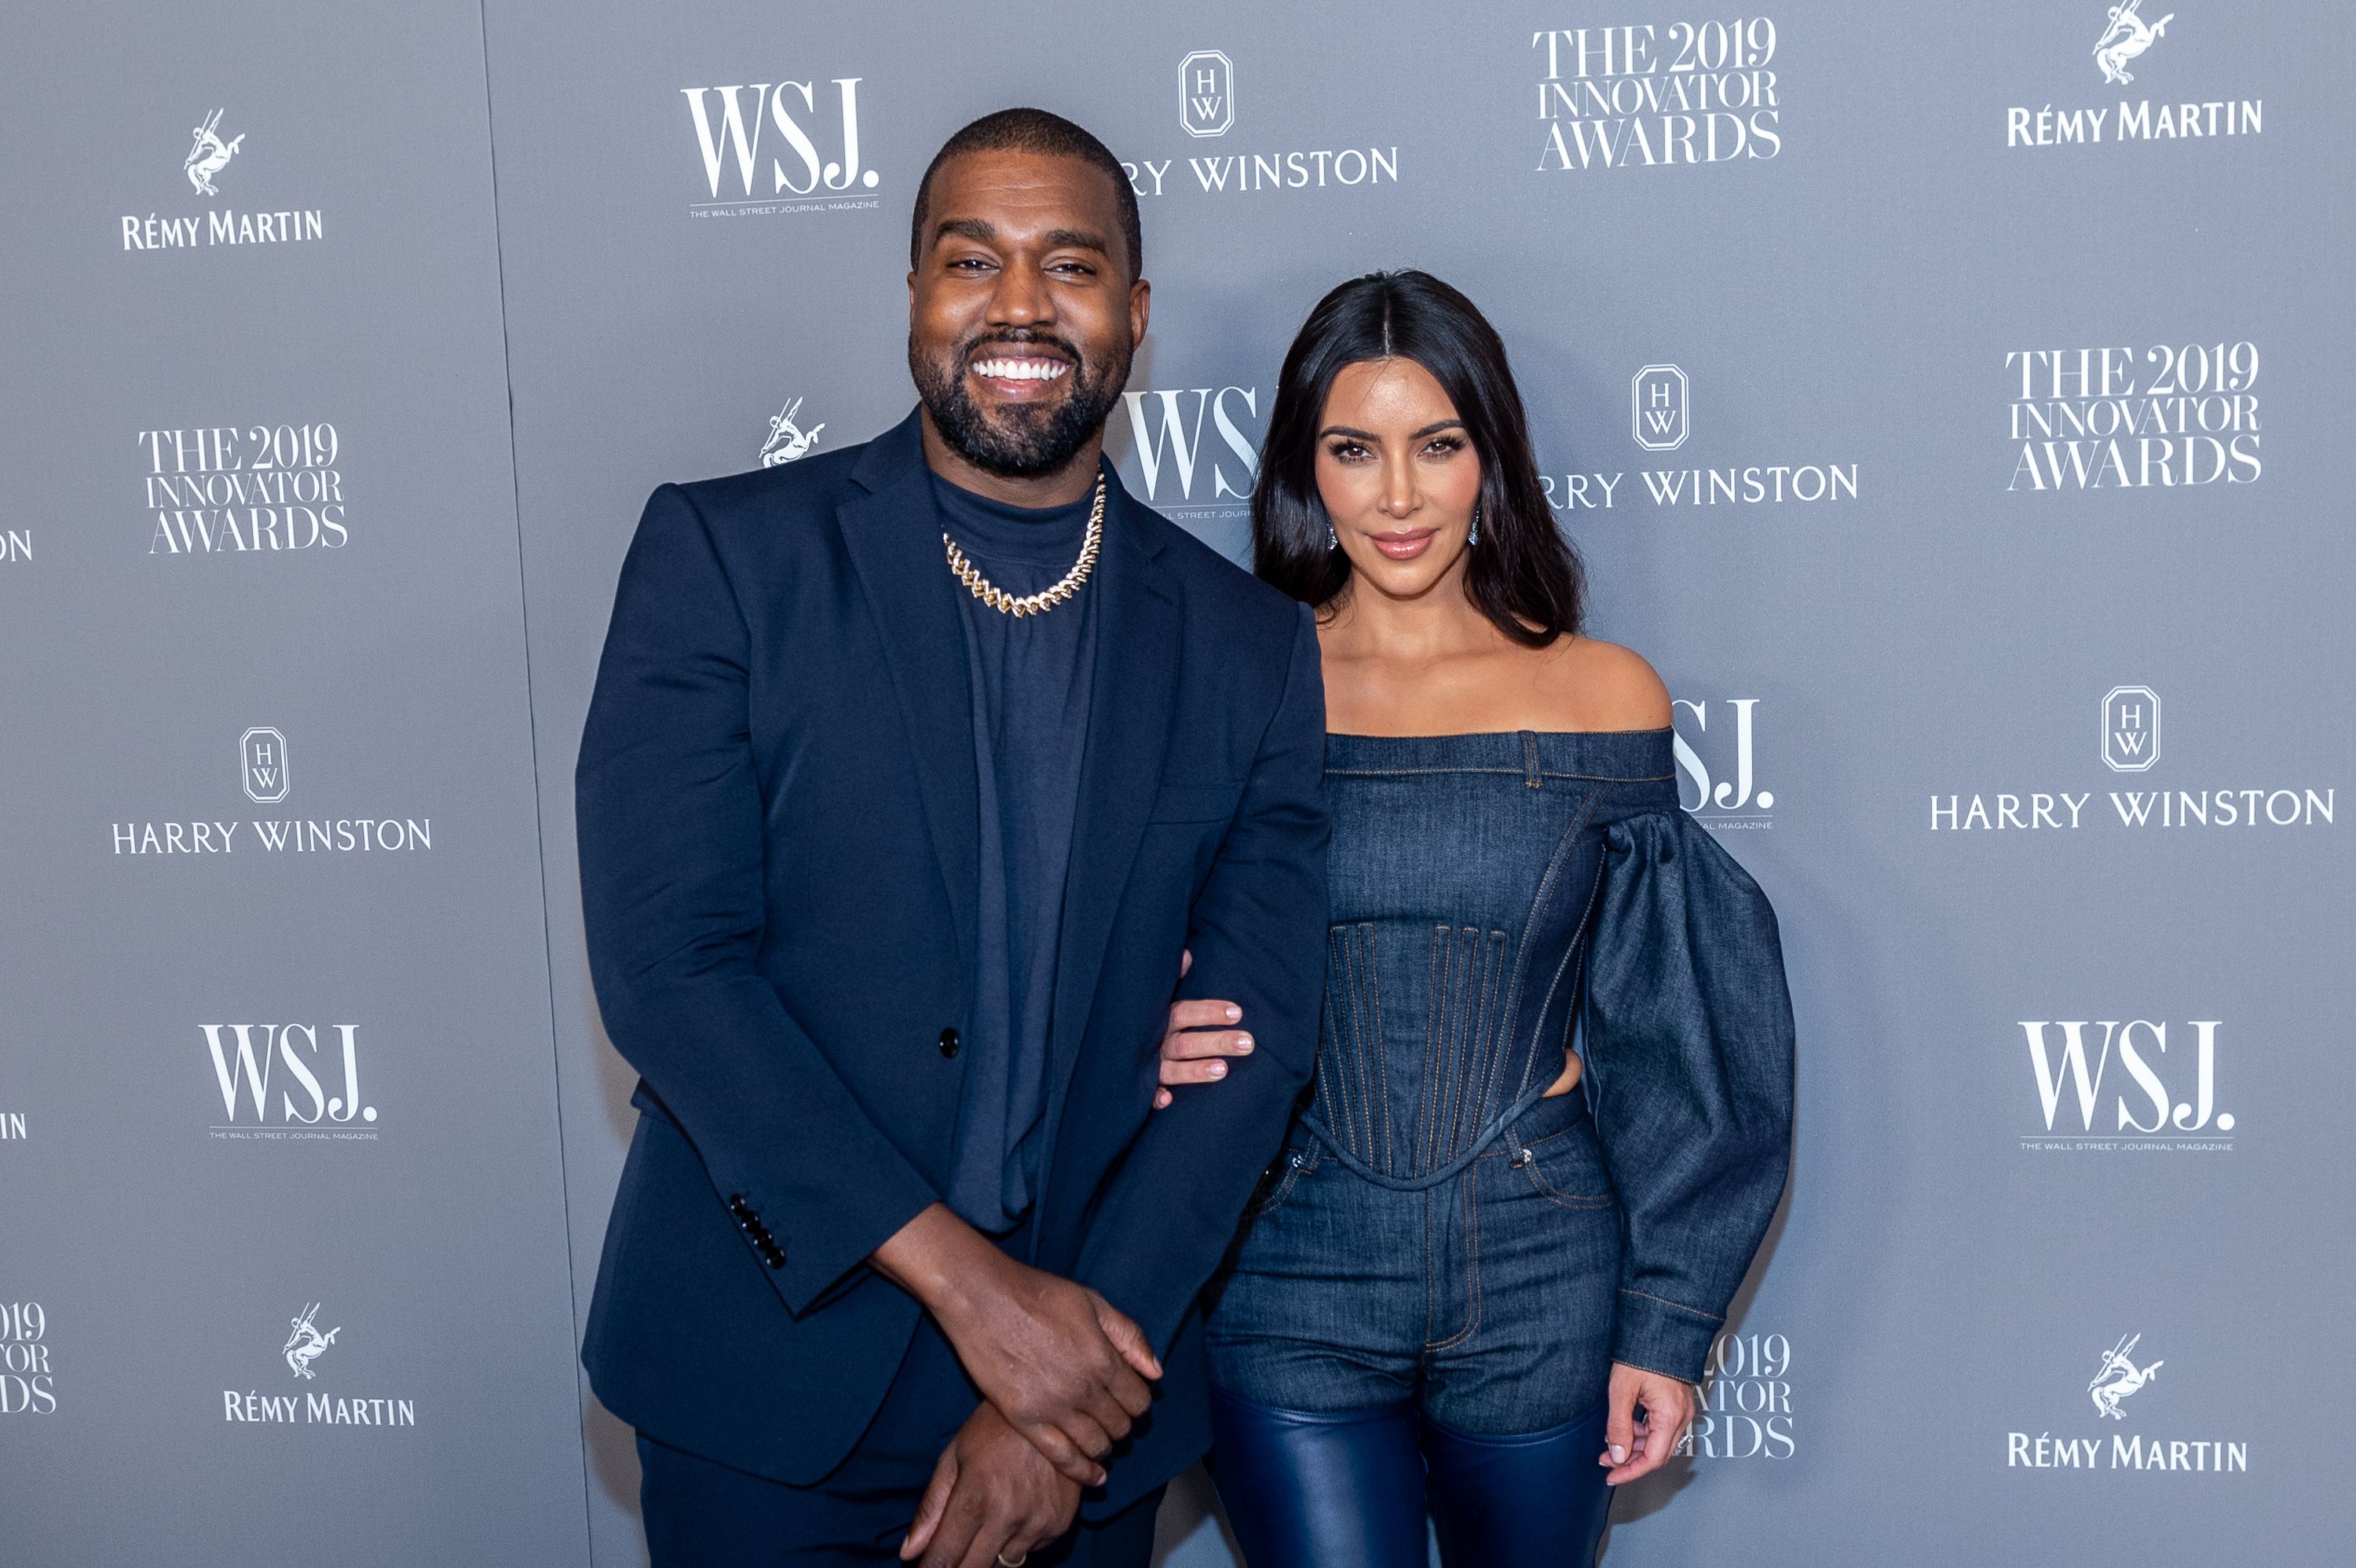 Kim Kardashian Calls Kanye West "Very Simple"